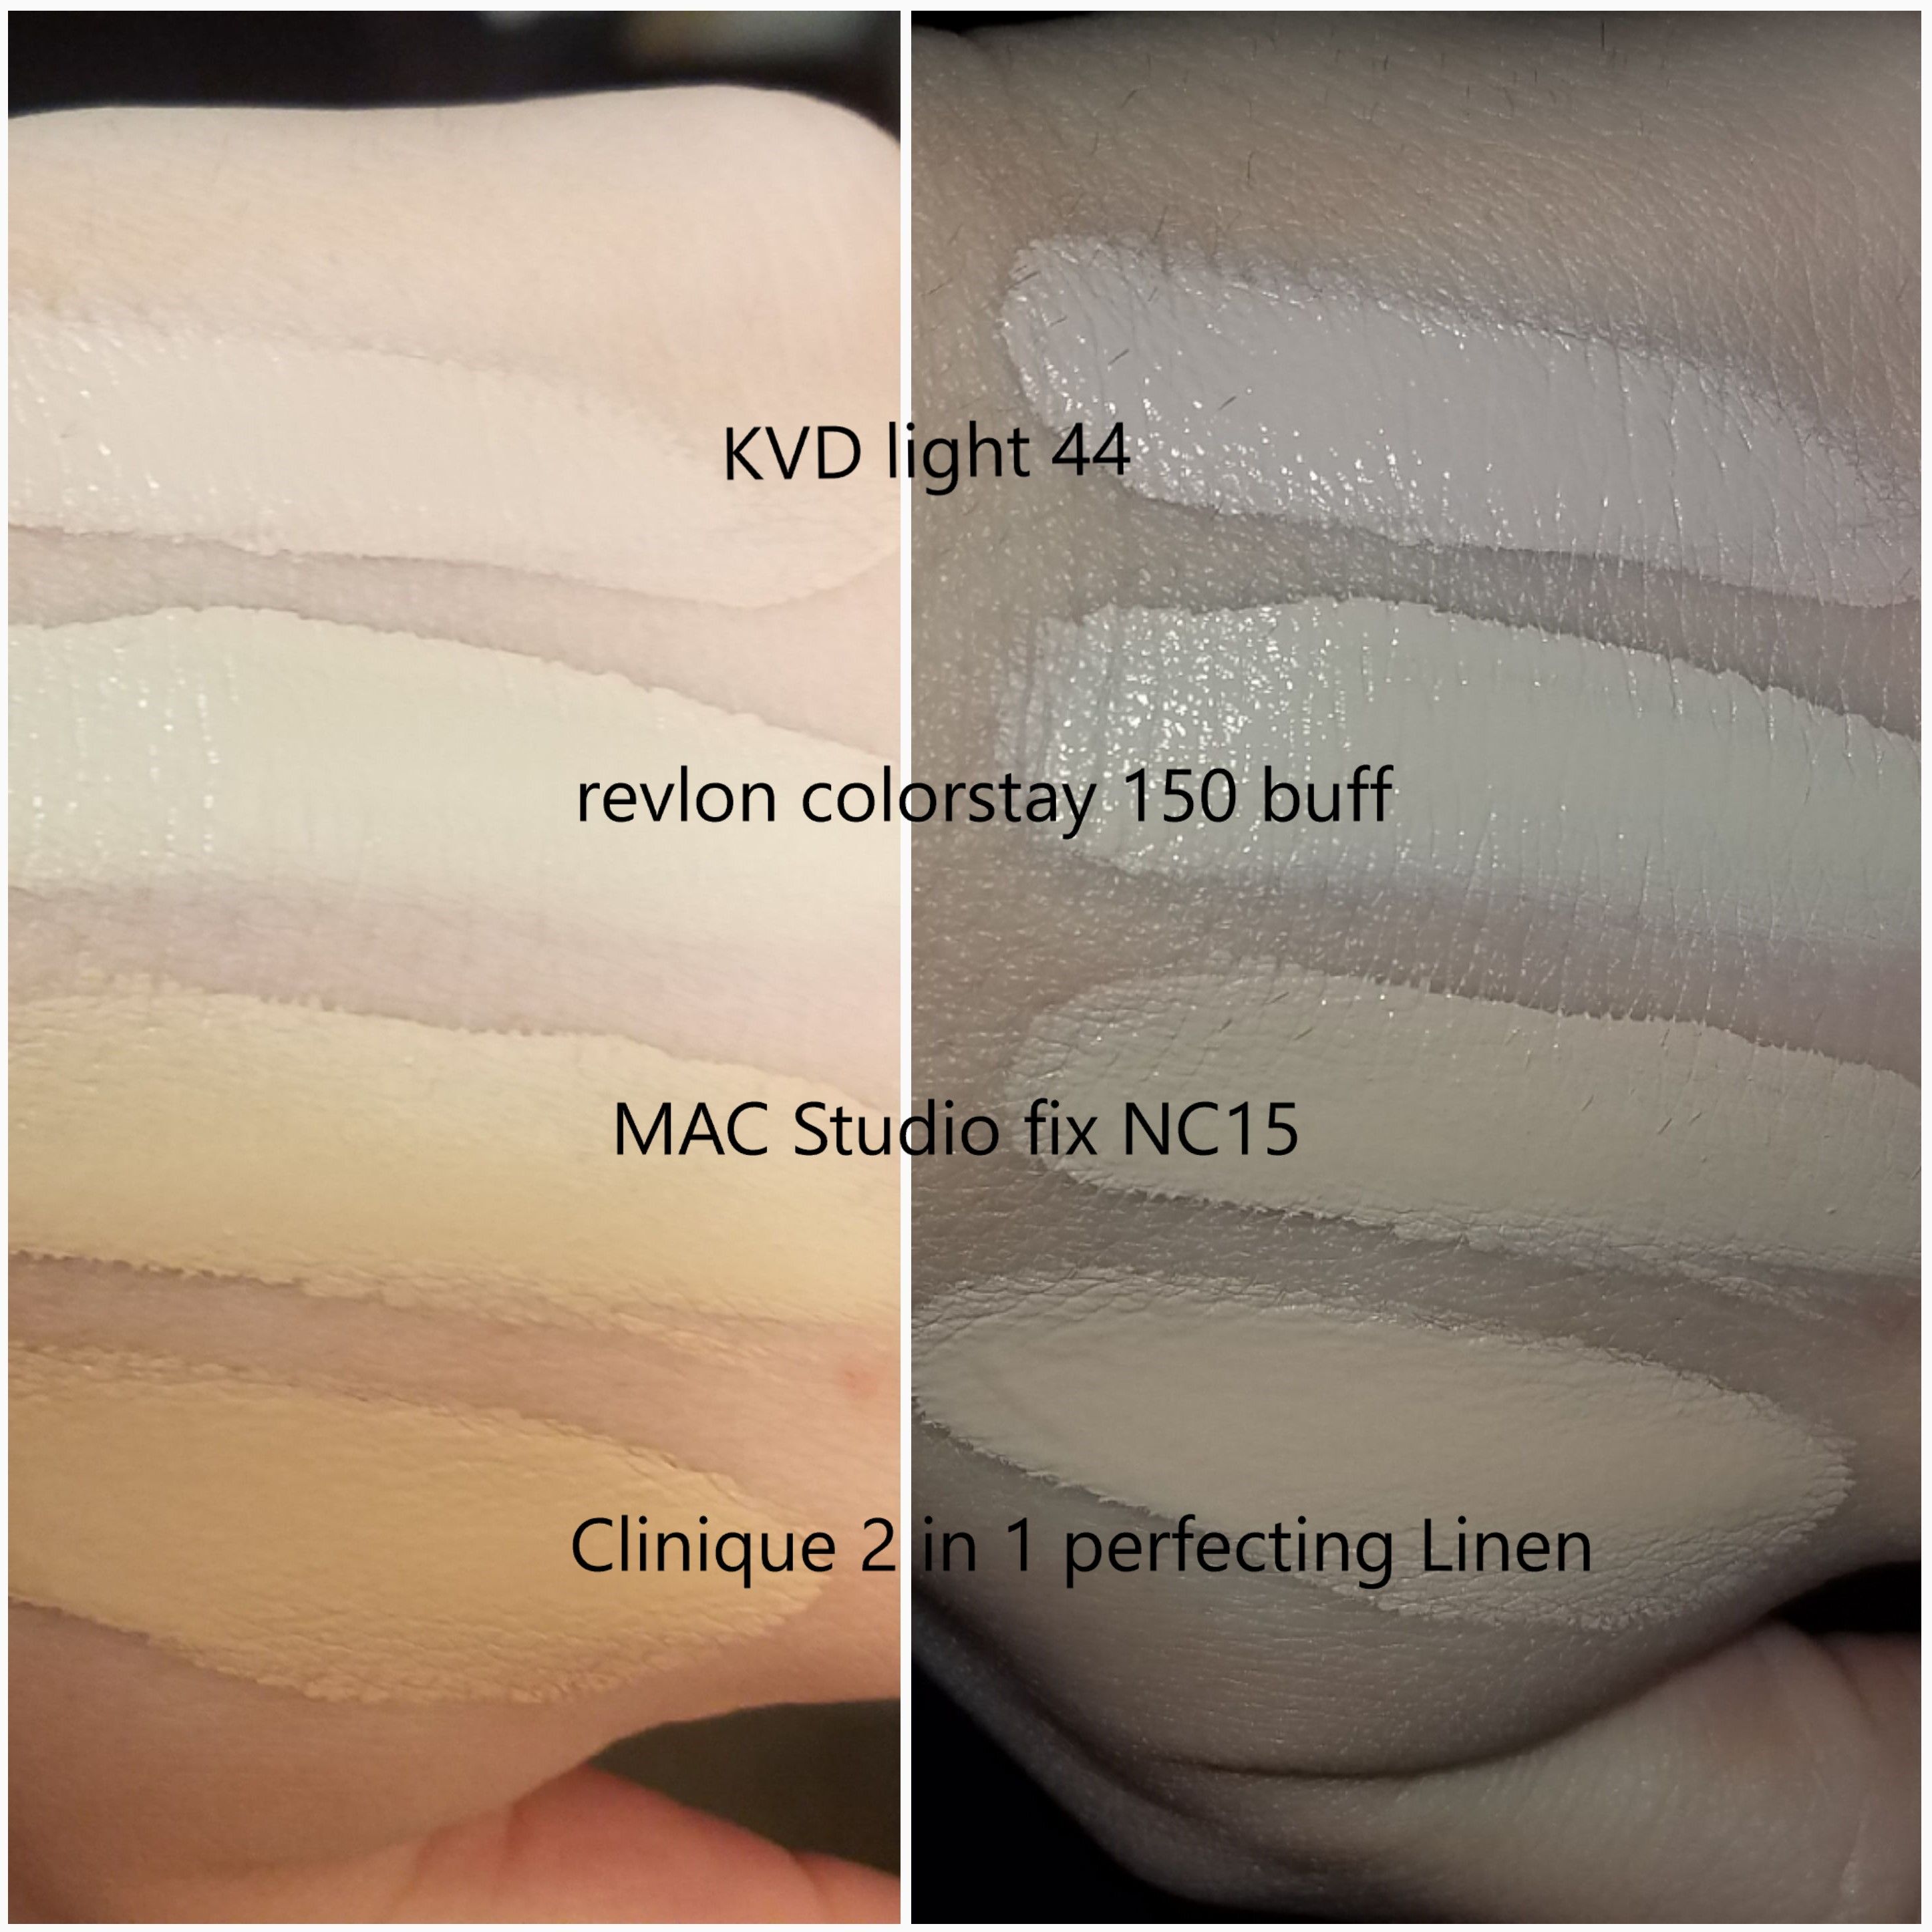 clinique vs mac foundation shades